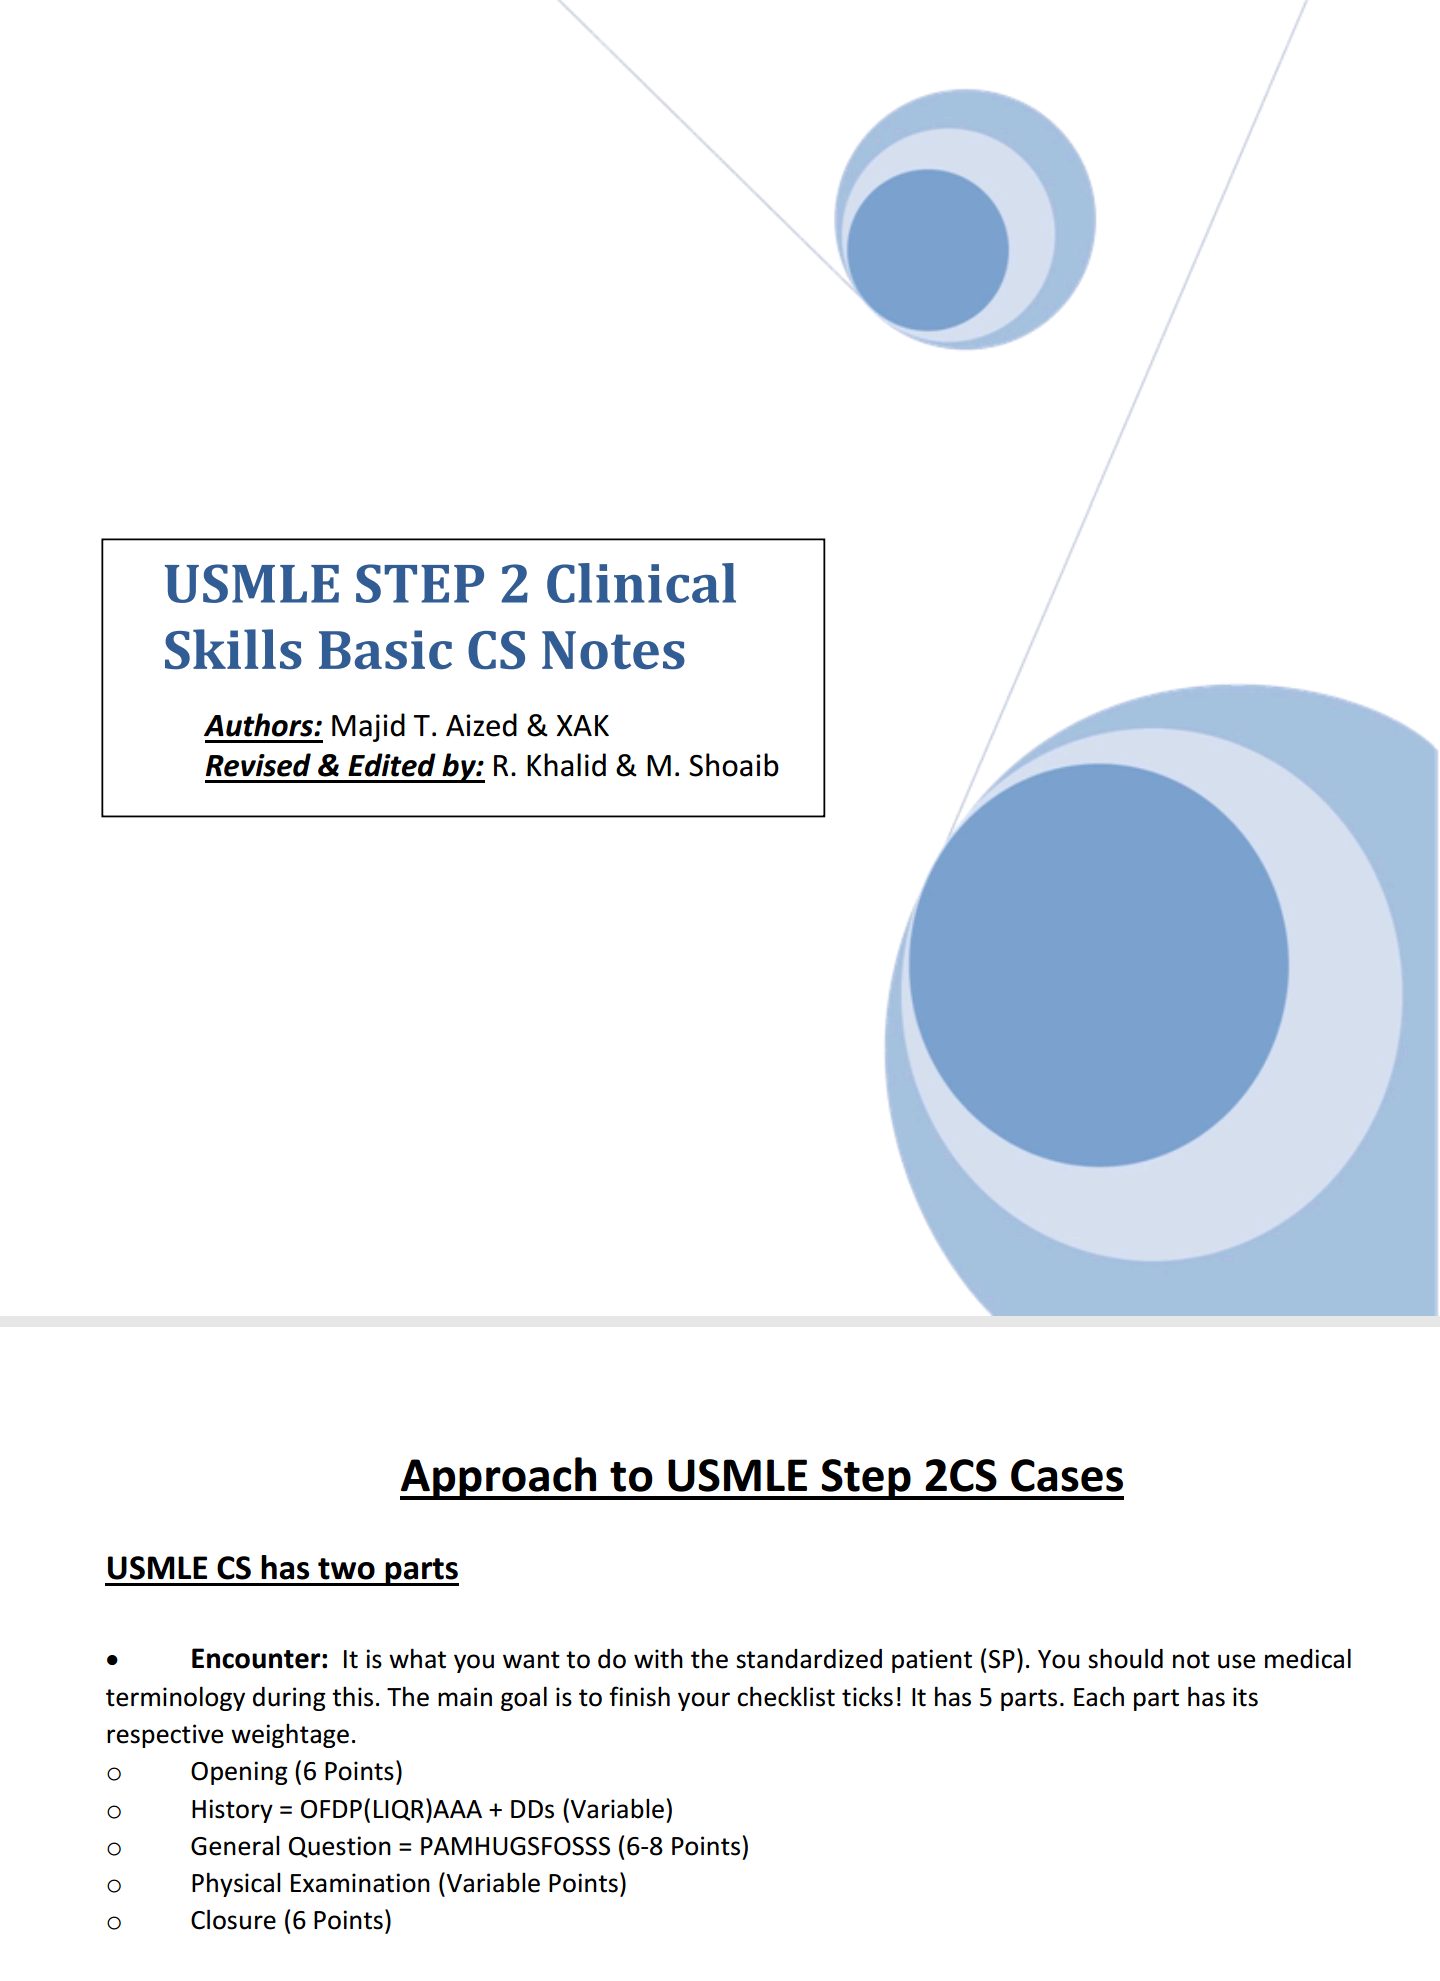 USMLE STEP 2 Clinical Skills Basic CS Notes